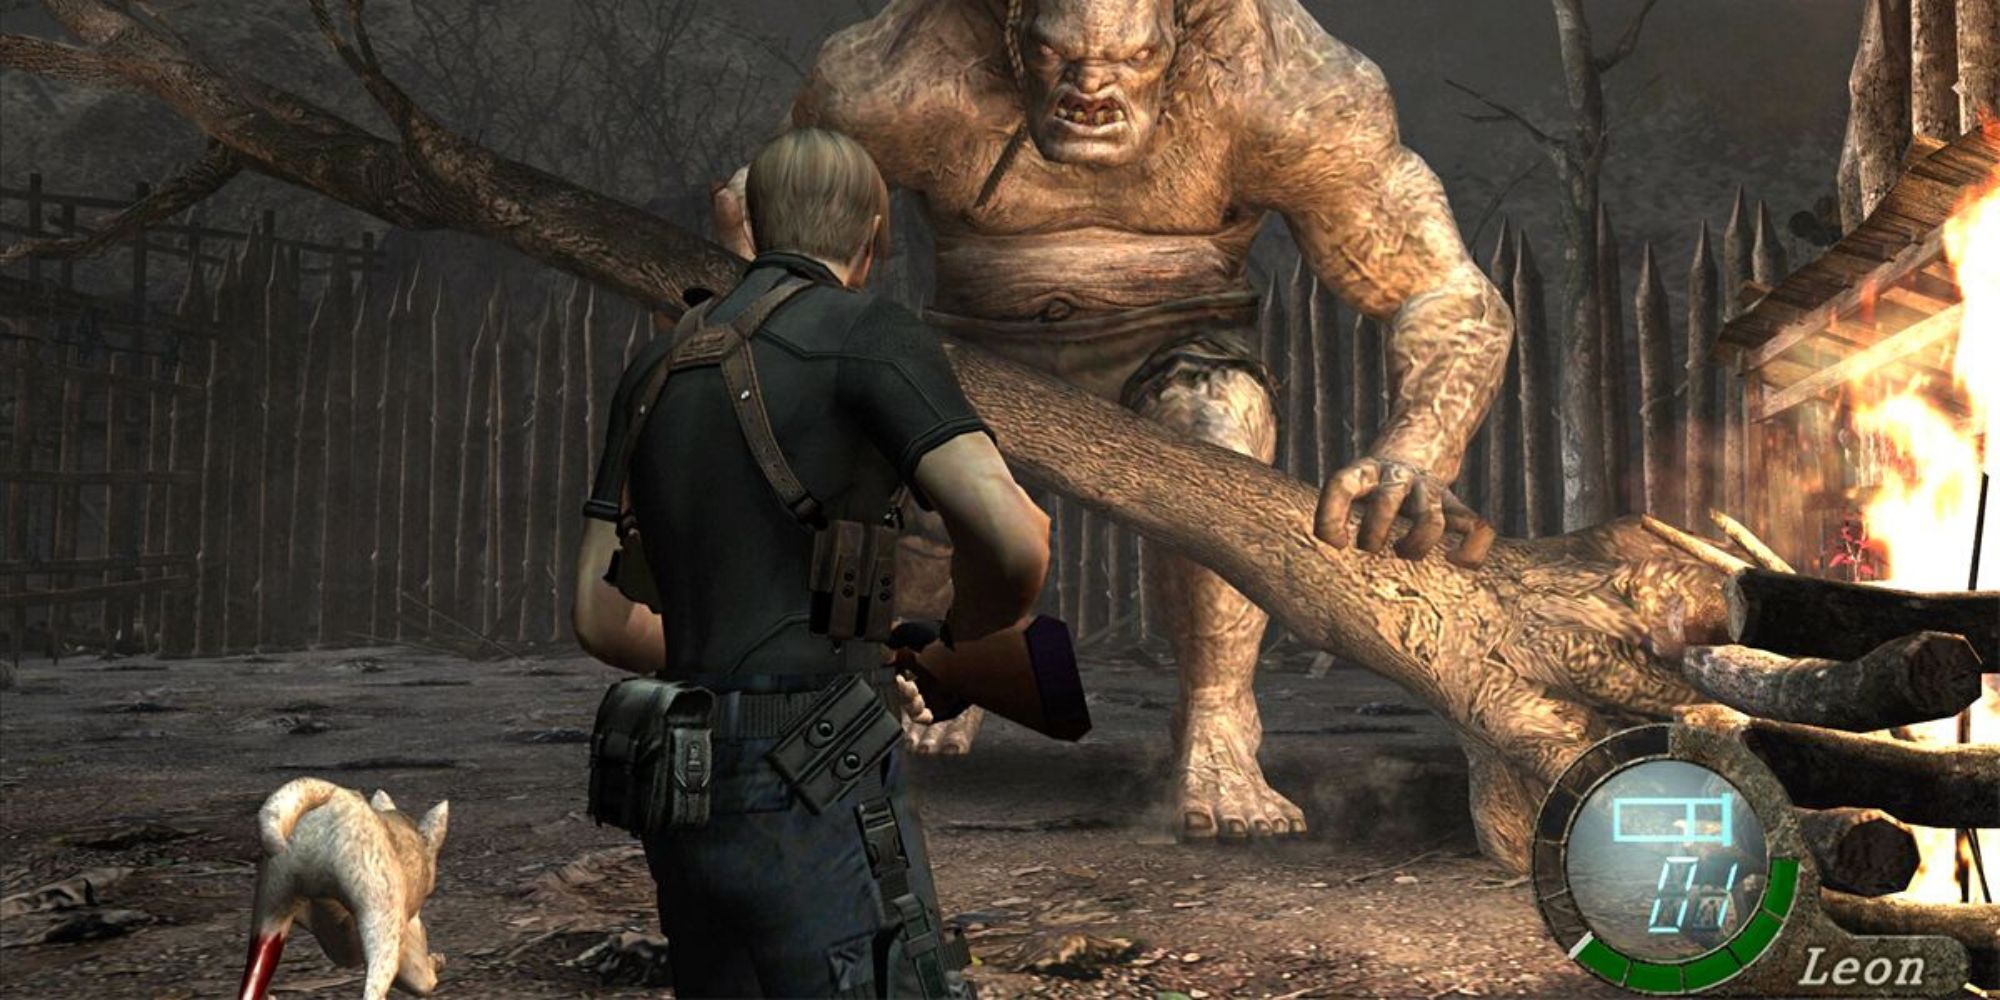 Leon fights an El Gigante Troll in Resident Evil 4